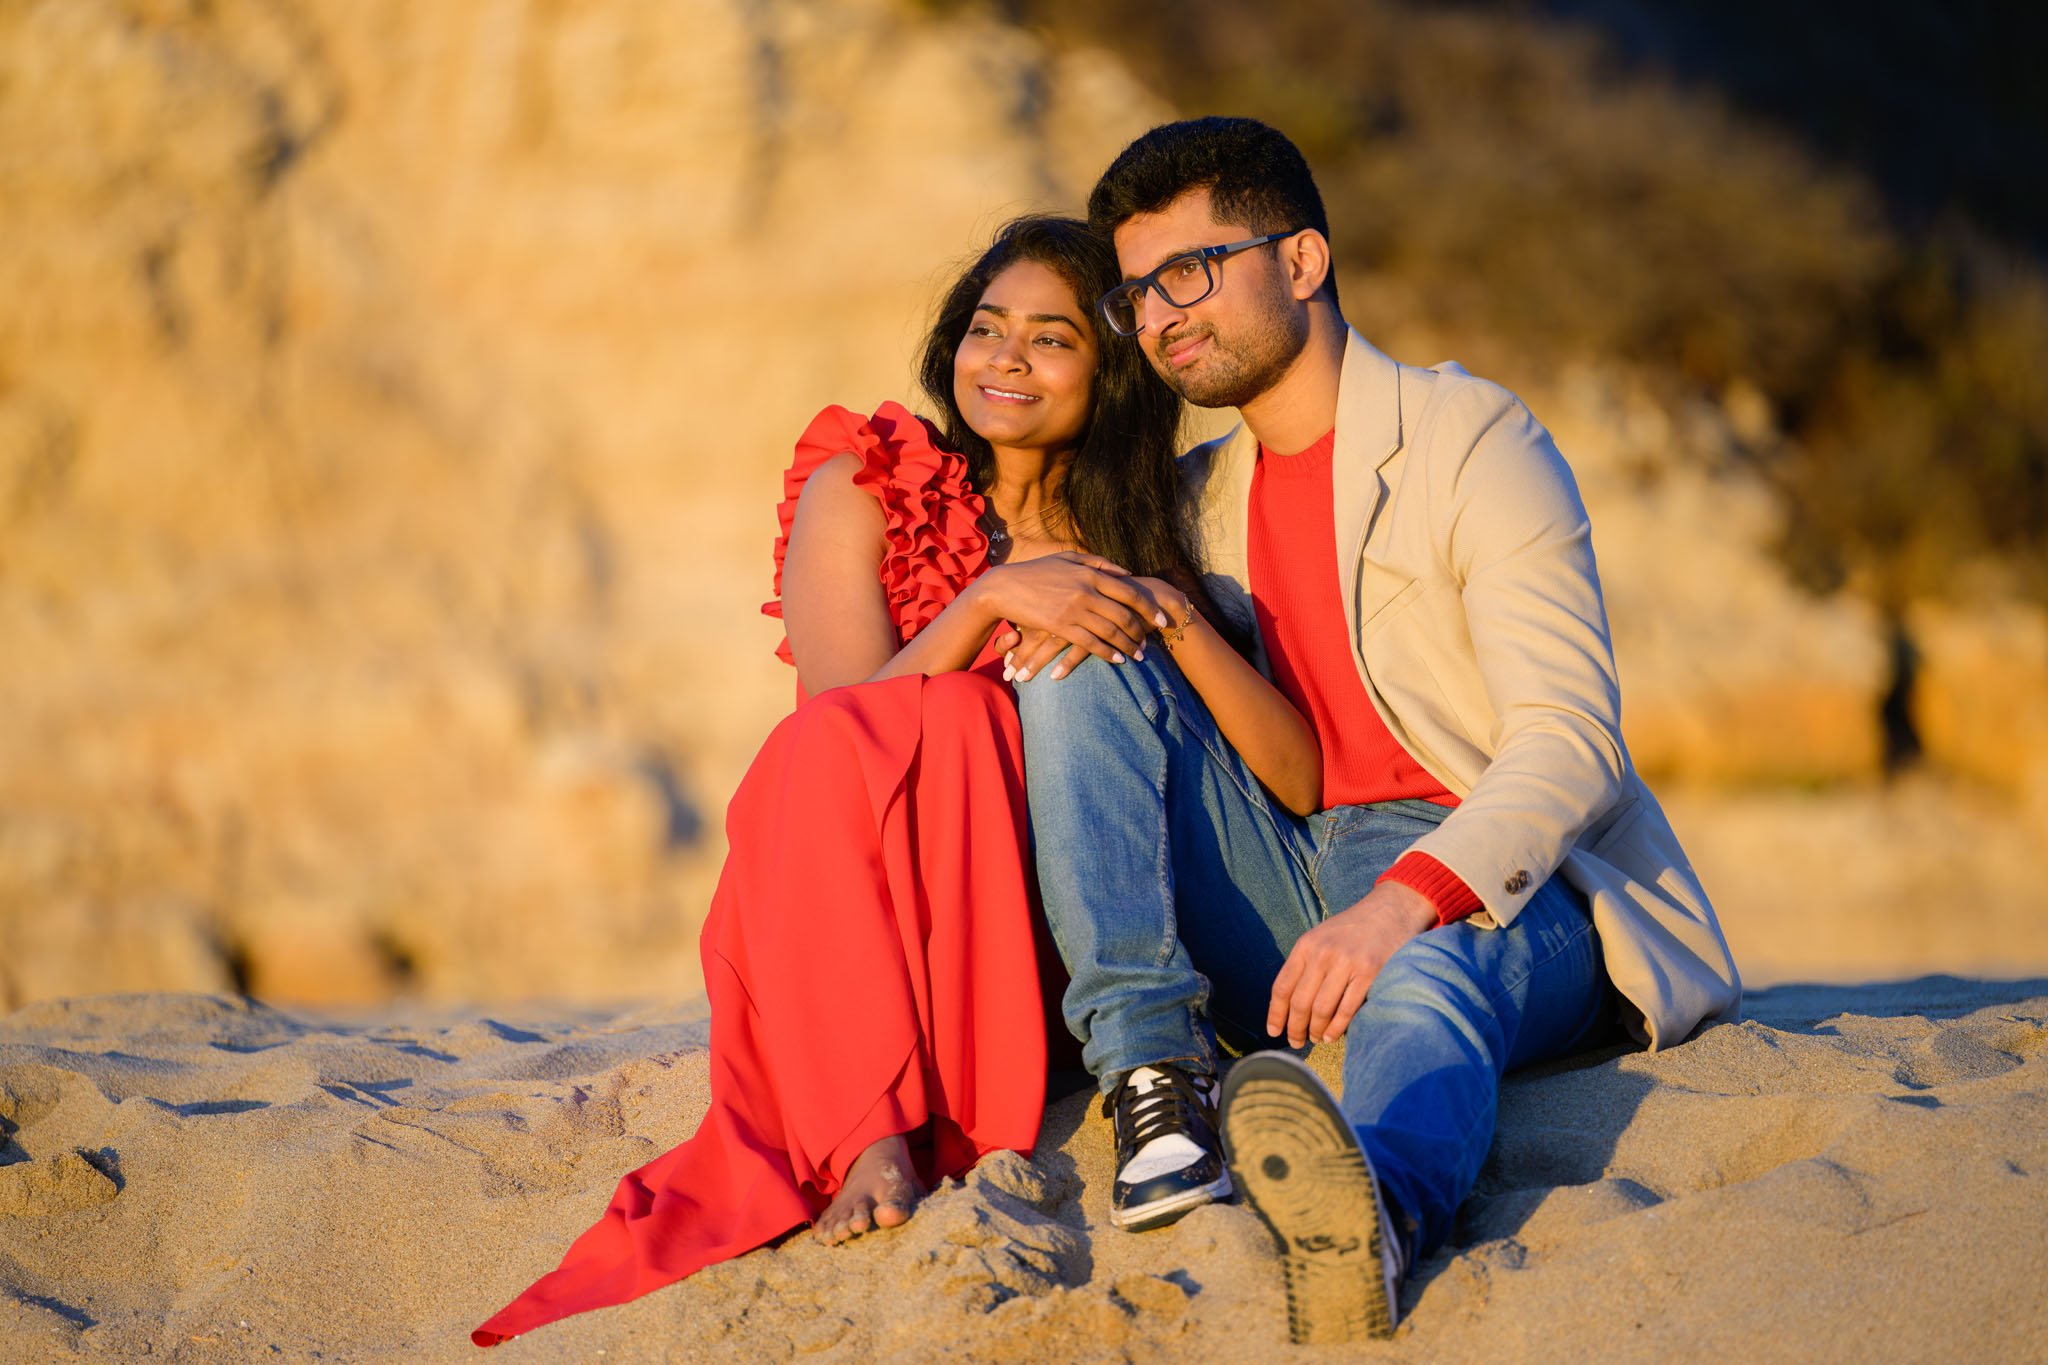 Z9A_2440_Satya_and_Asha_Santa_Cruz_Panther_Beach_Proposal_Engagement_Photography-Enhanced-NR.jpg